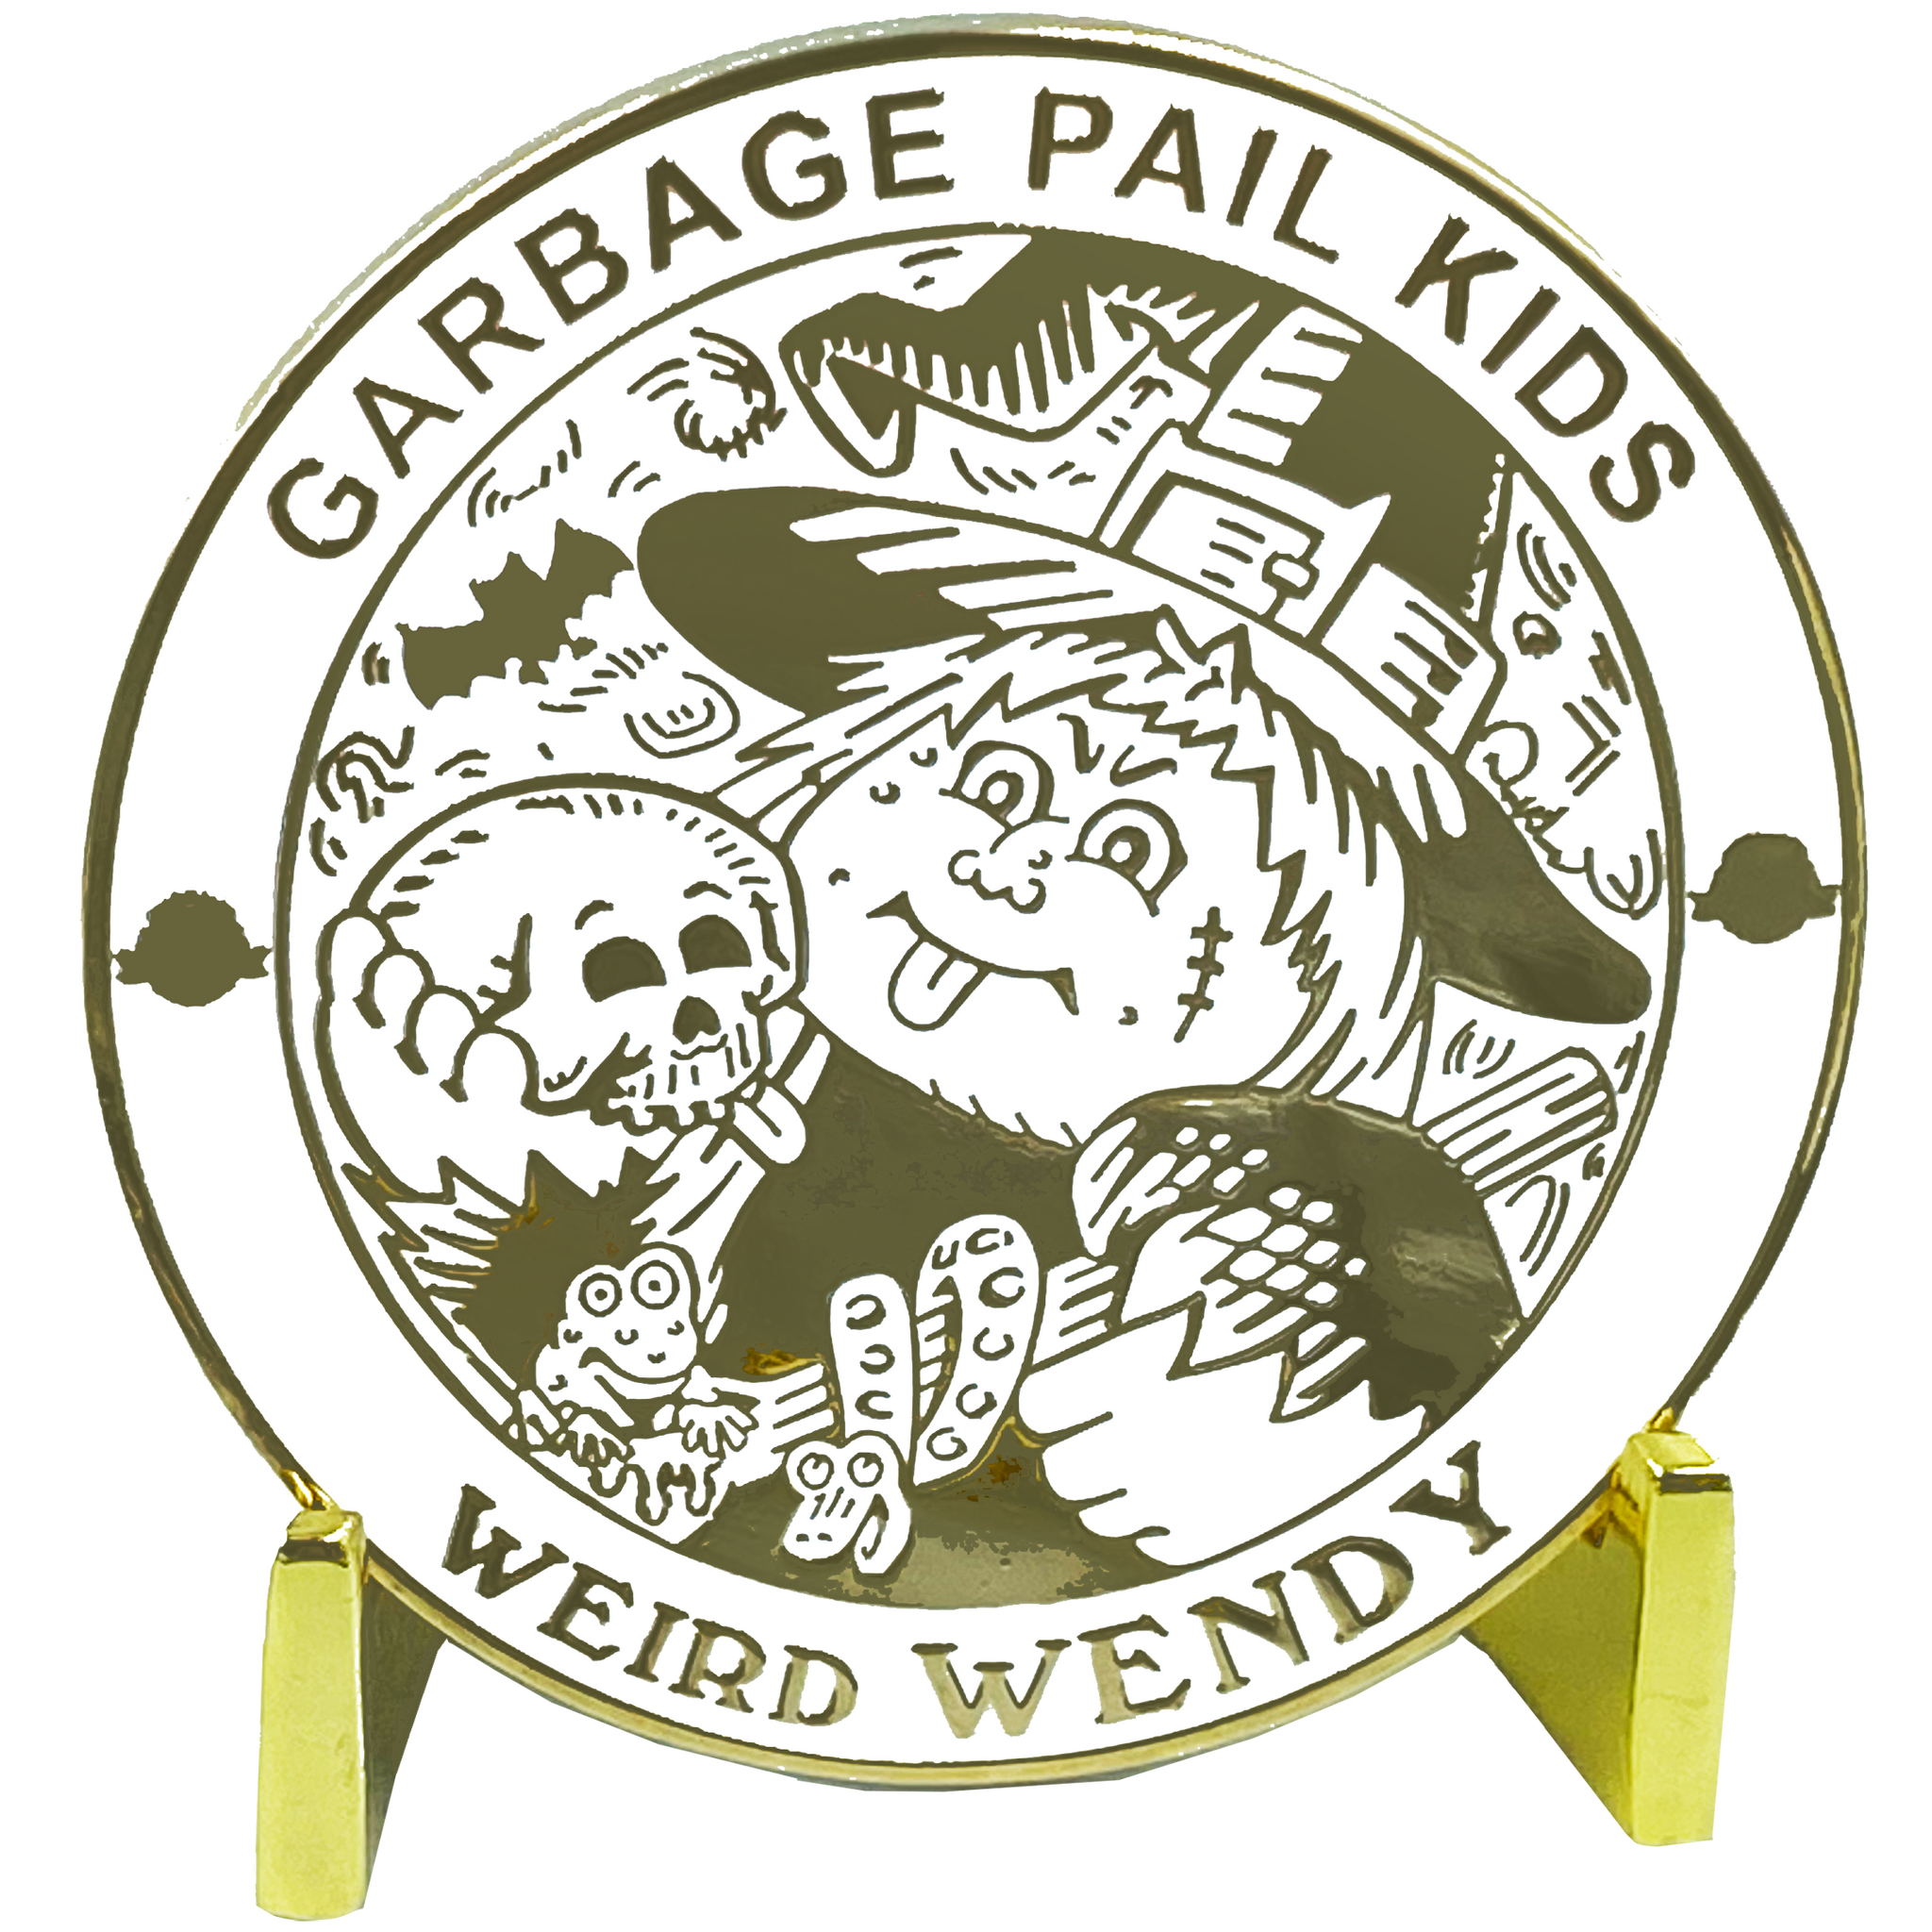 GPK-CC-002 WEIRD WENDY Topps Officially Licensed David Gross Artist Collaboration GPK Challenge Coin Garbage Pail Kids